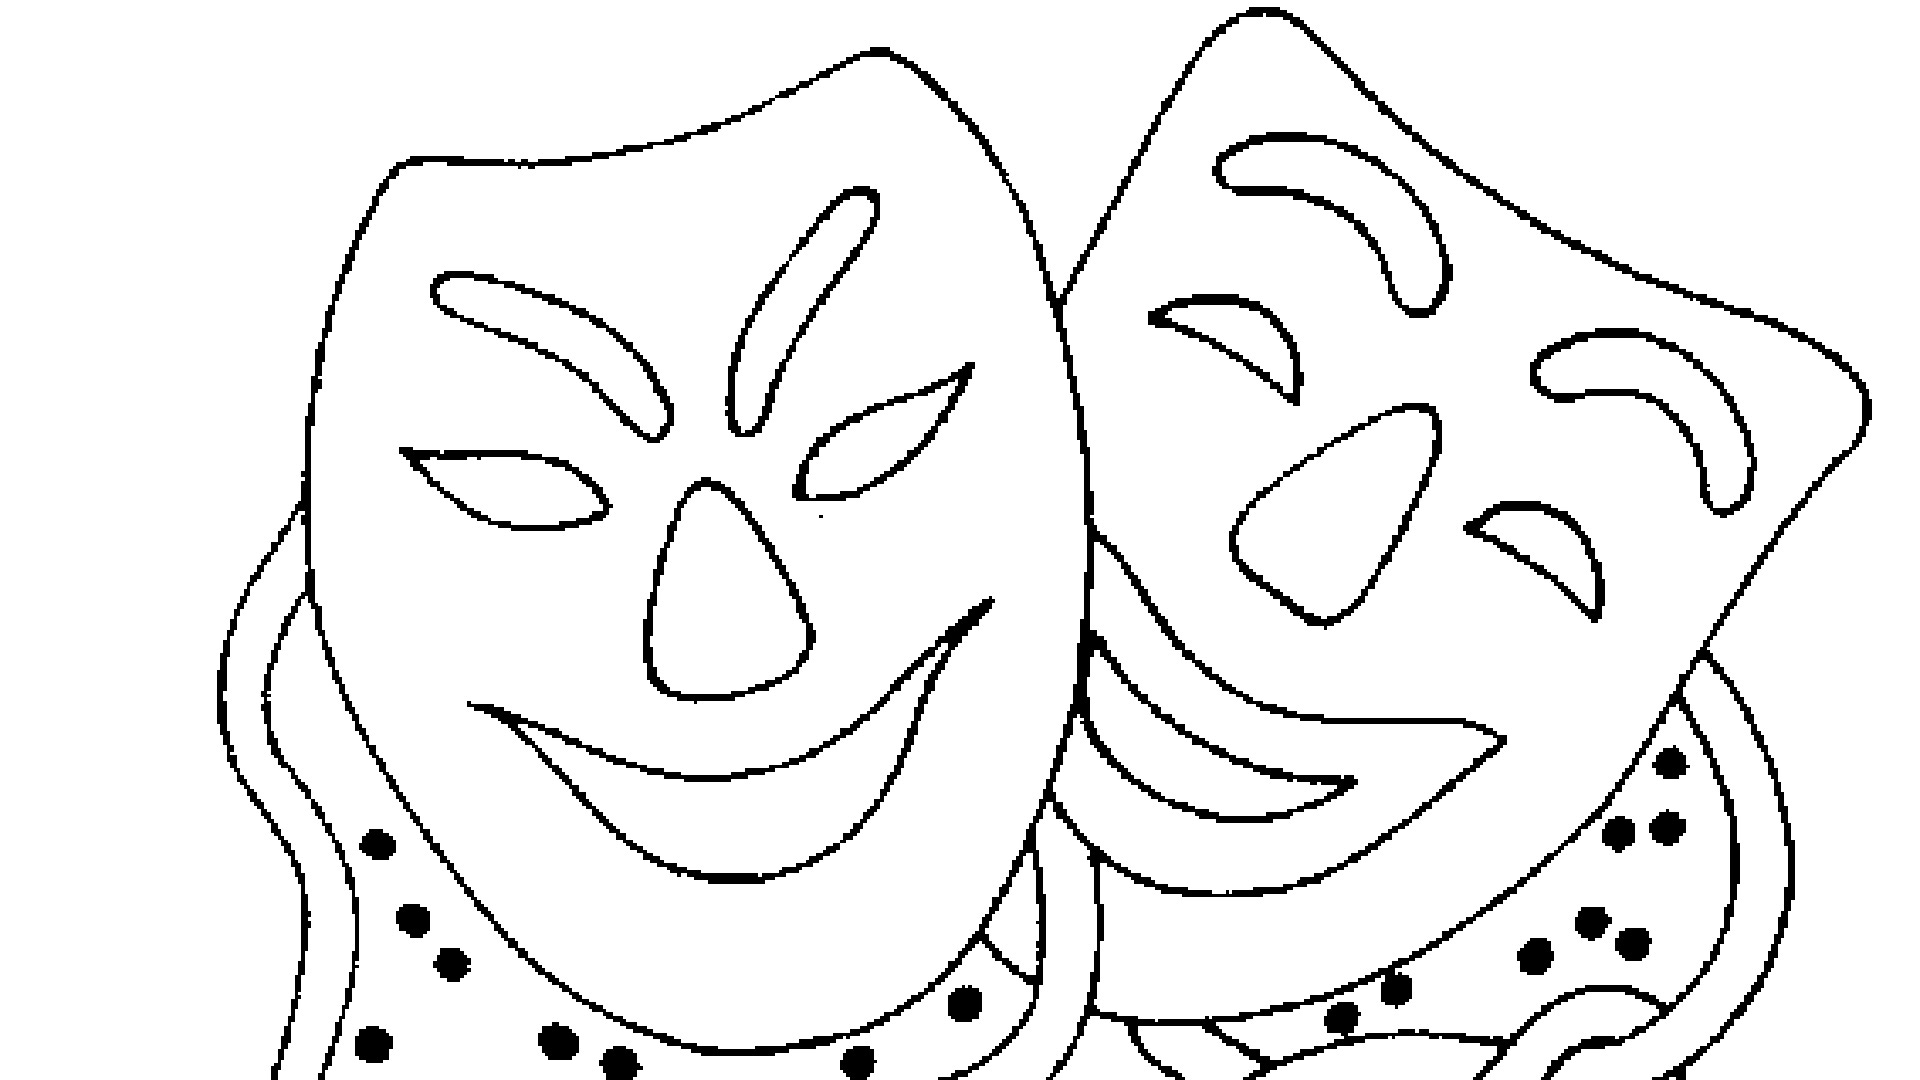 Театральная маска для печати. Маска раскраска. Трафареты театральных масок для лица. Театральные маски раскраски для детей. Театральная маска трафарет.